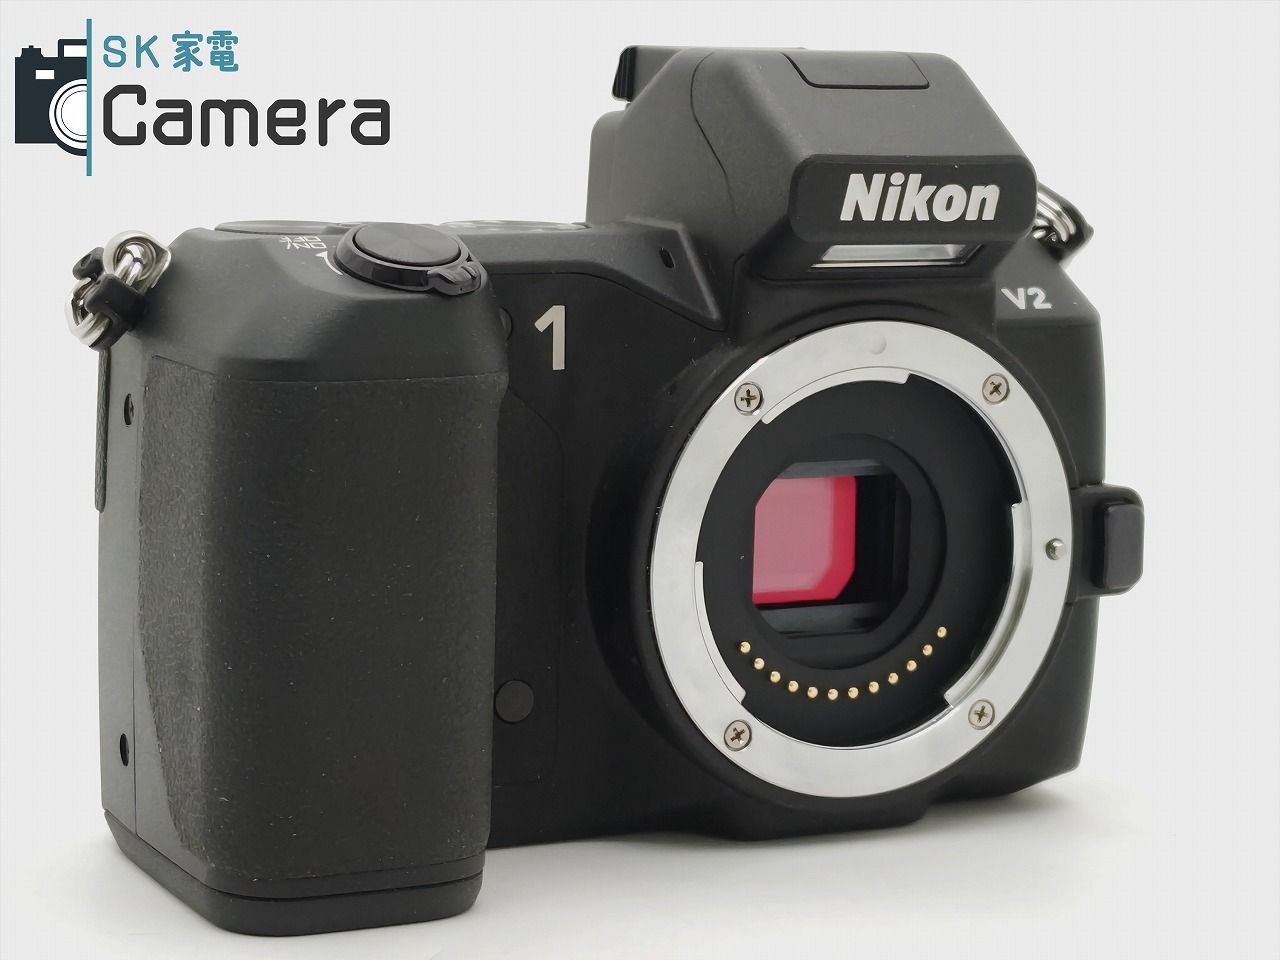 Nikon1 V2 ニコン 電池付 - メルカリ